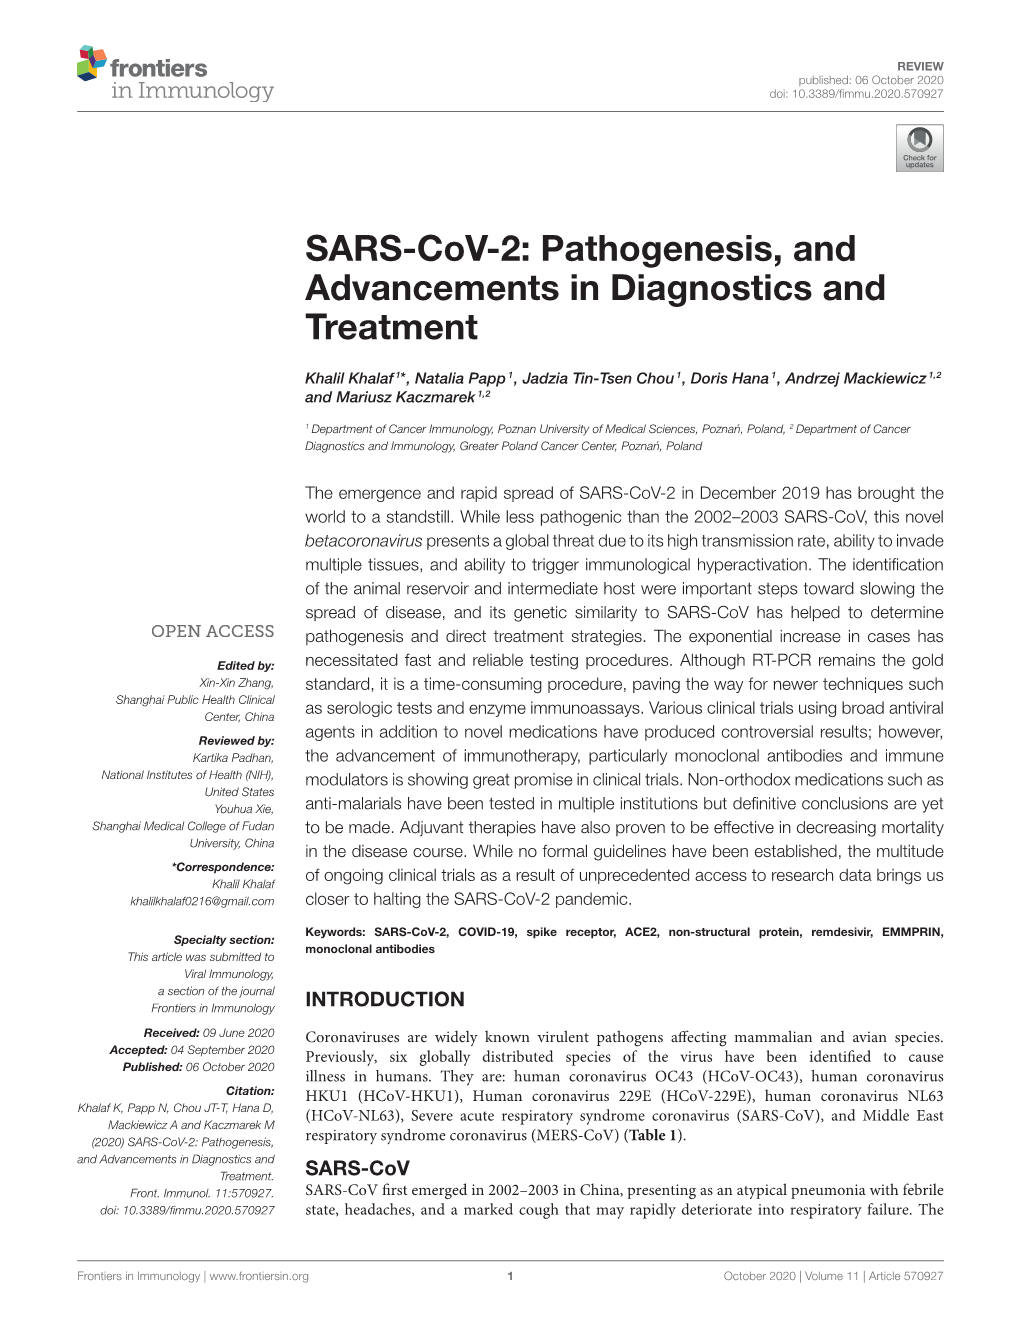 SARS-Cov-2: Pathogenesis, and Advancements in Diagnostics and Treatment